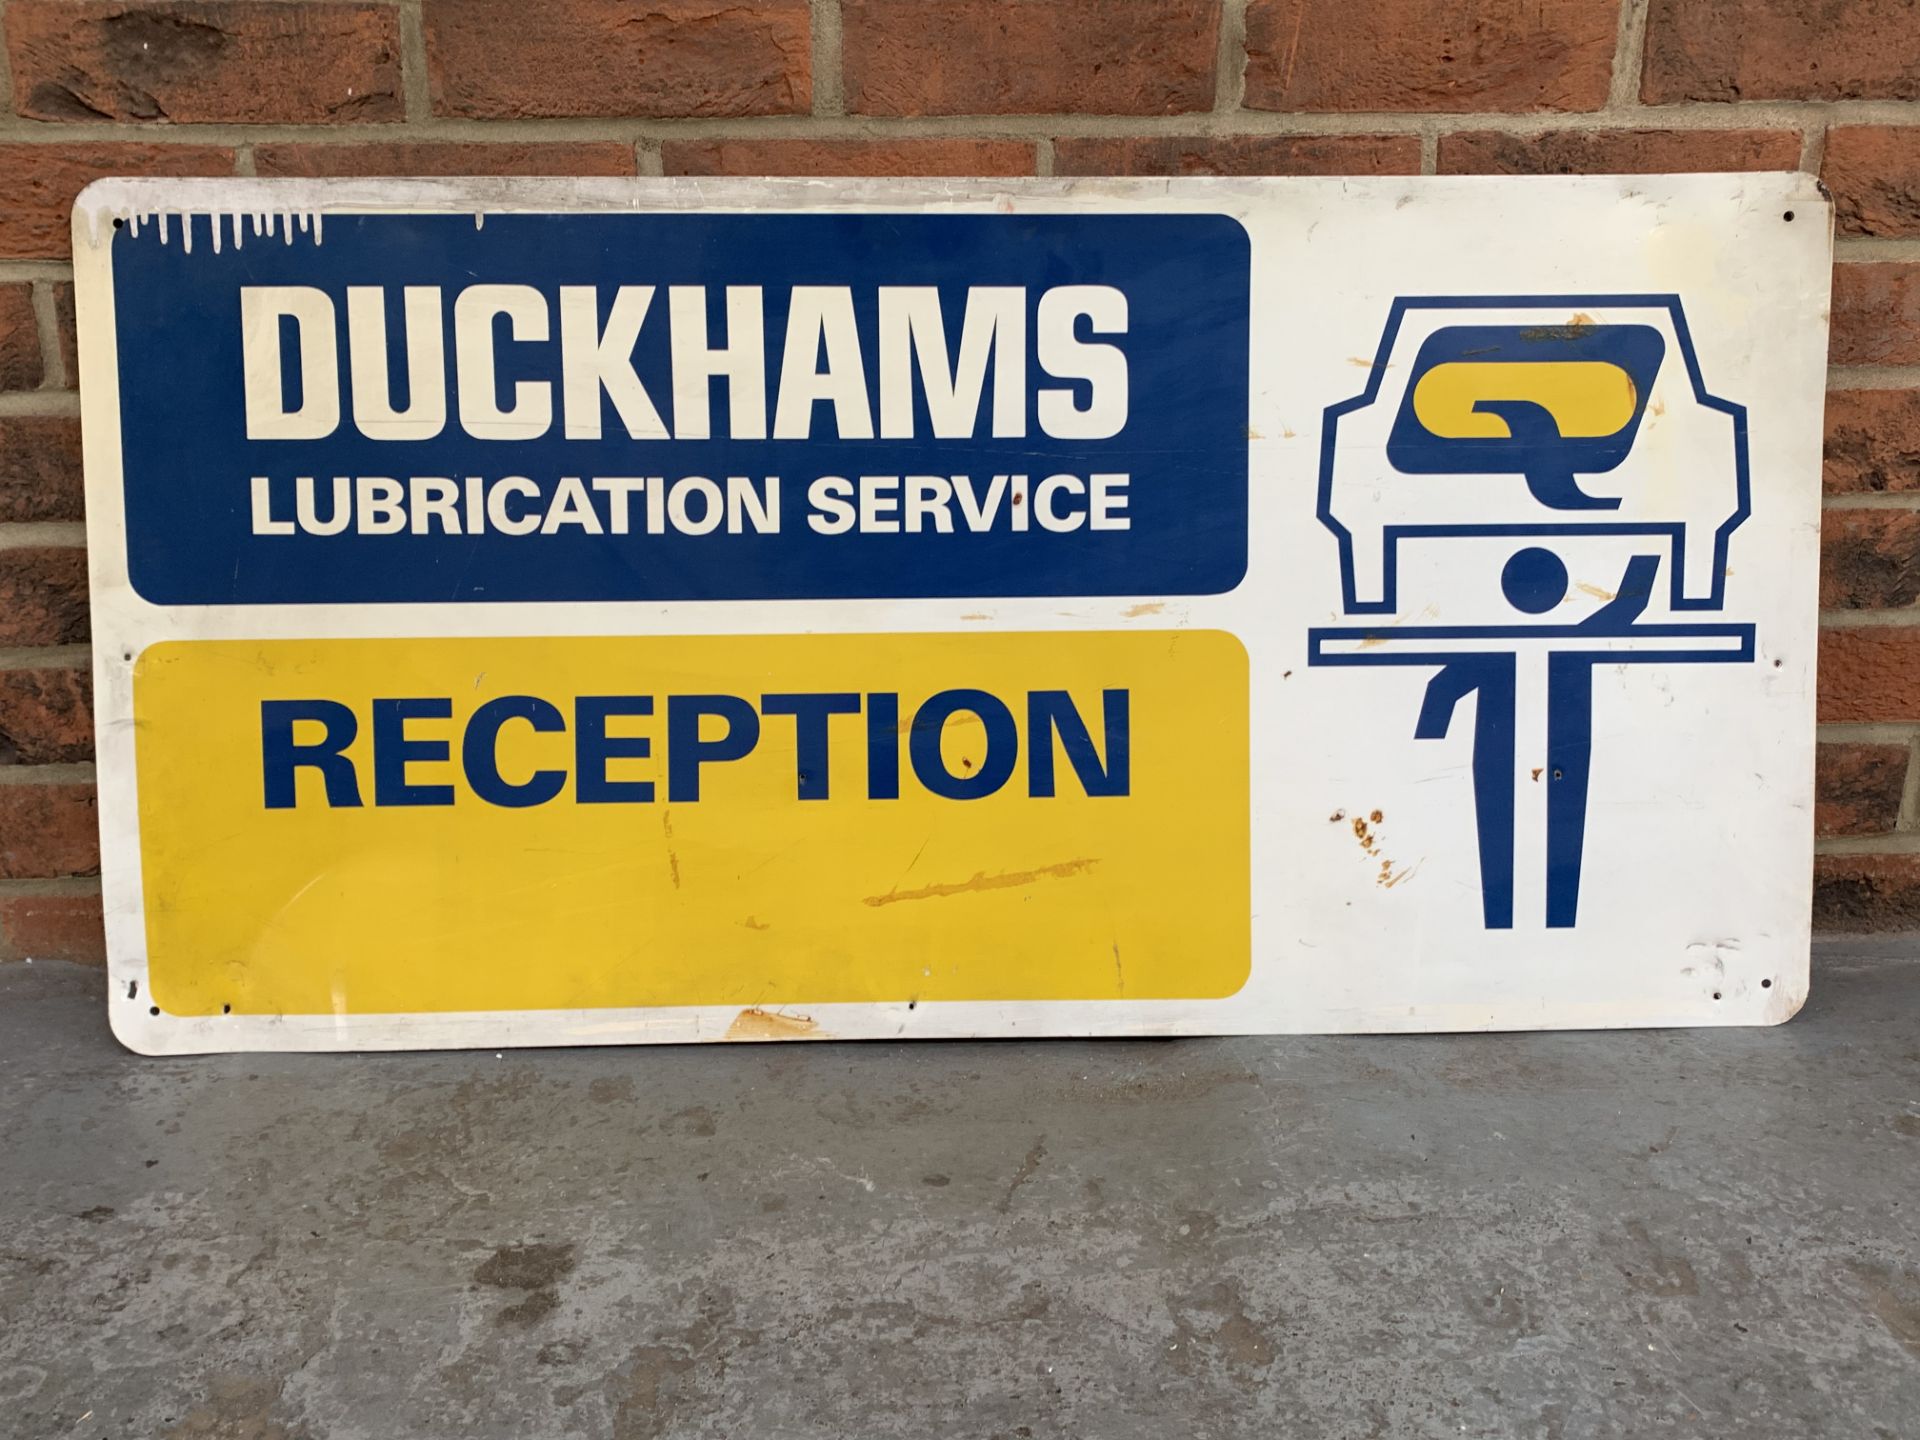 Aluminium Duckhams Lubrication Service Reception